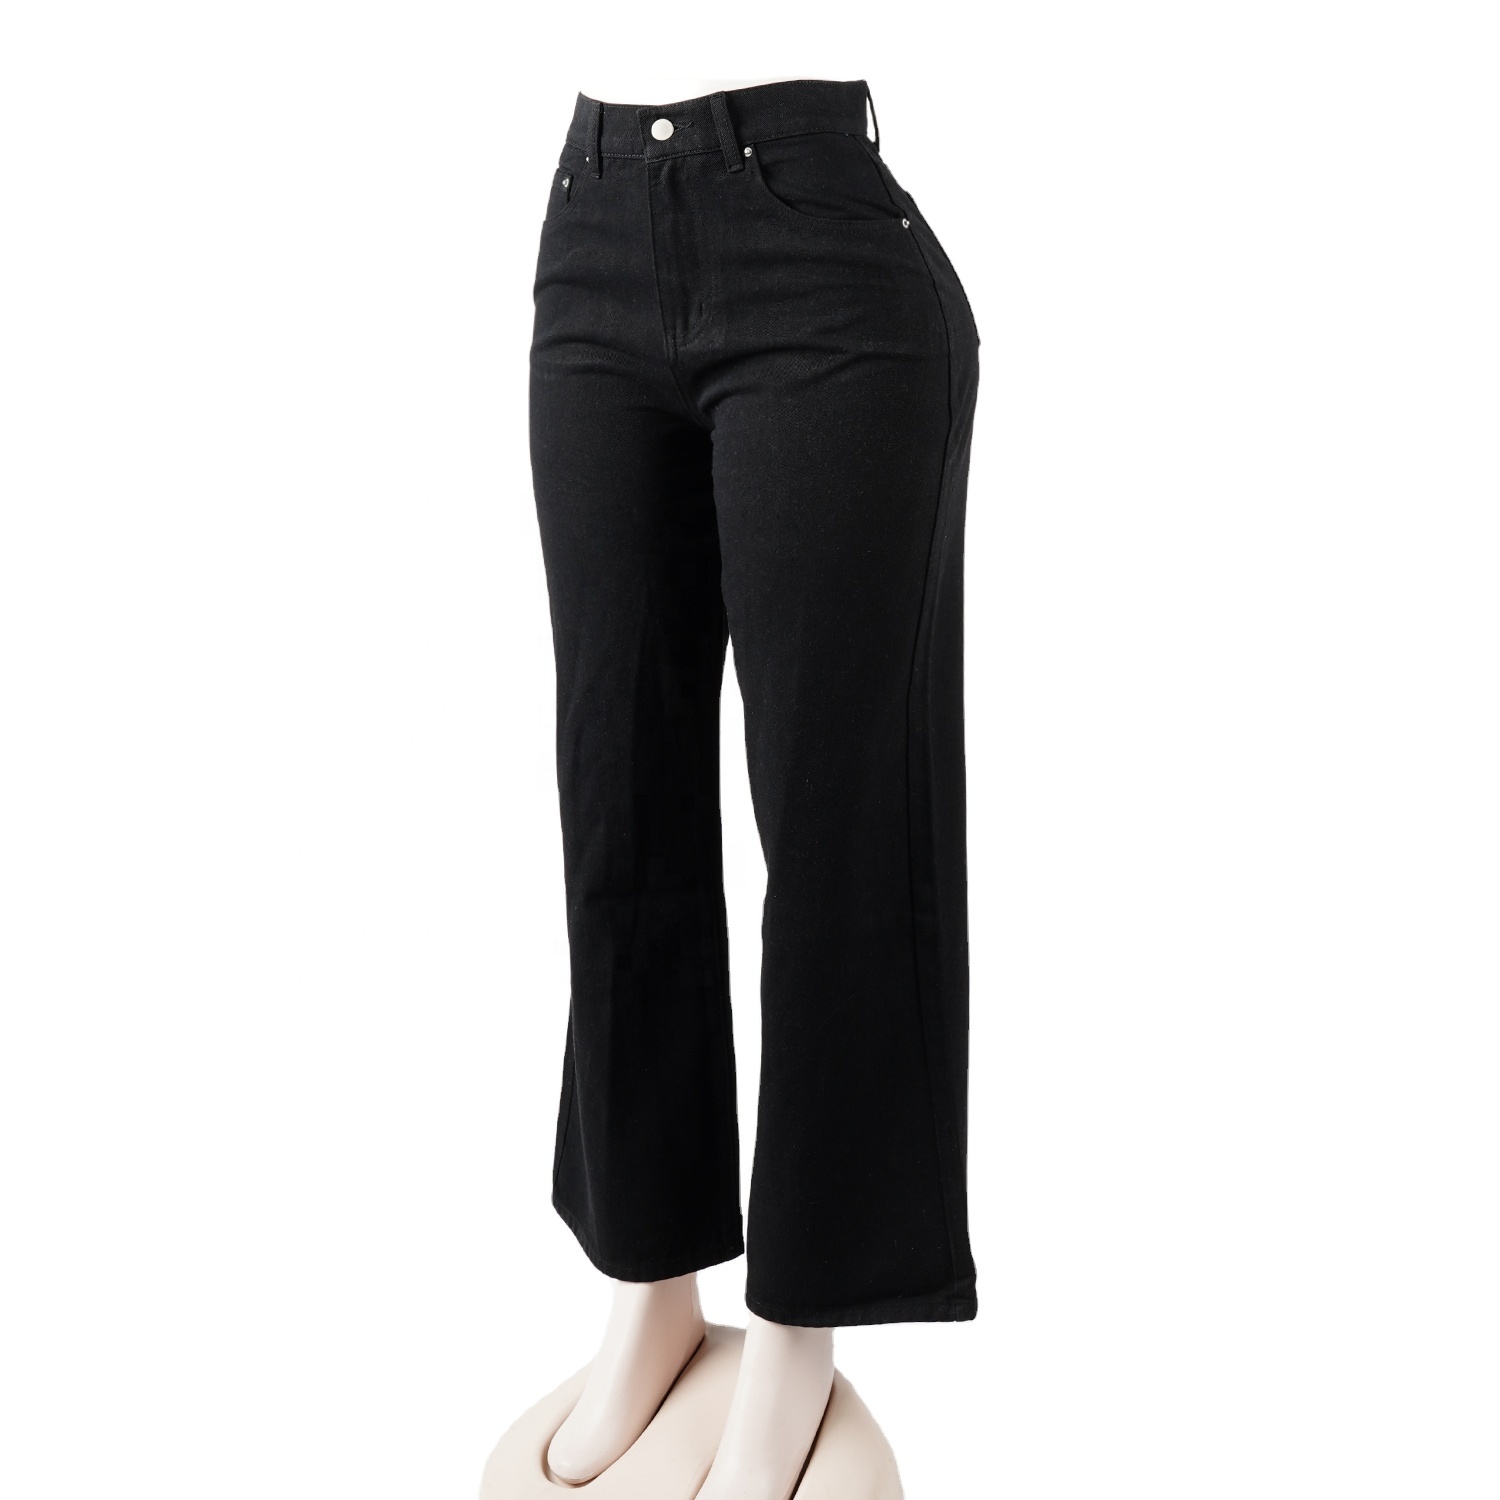 SKYKINGDOM 2020 hot sale jeans high waist black jeans cotton comfortable fitting denim jeans women